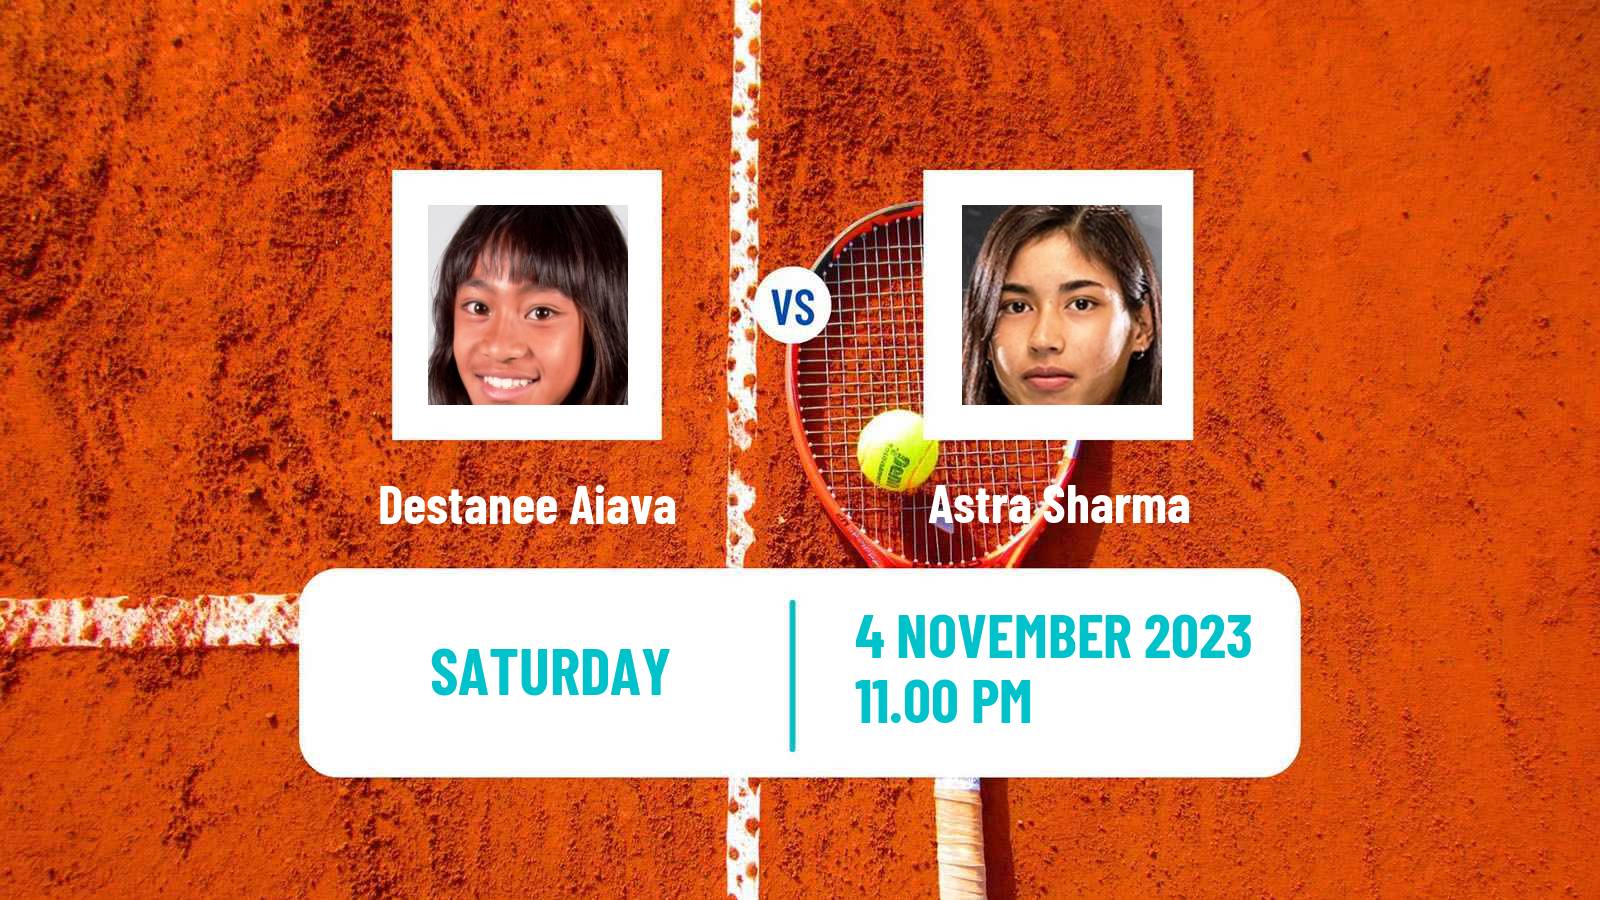 Tennis ITF W60 Sydney Women Destanee Aiava - Astra Sharma